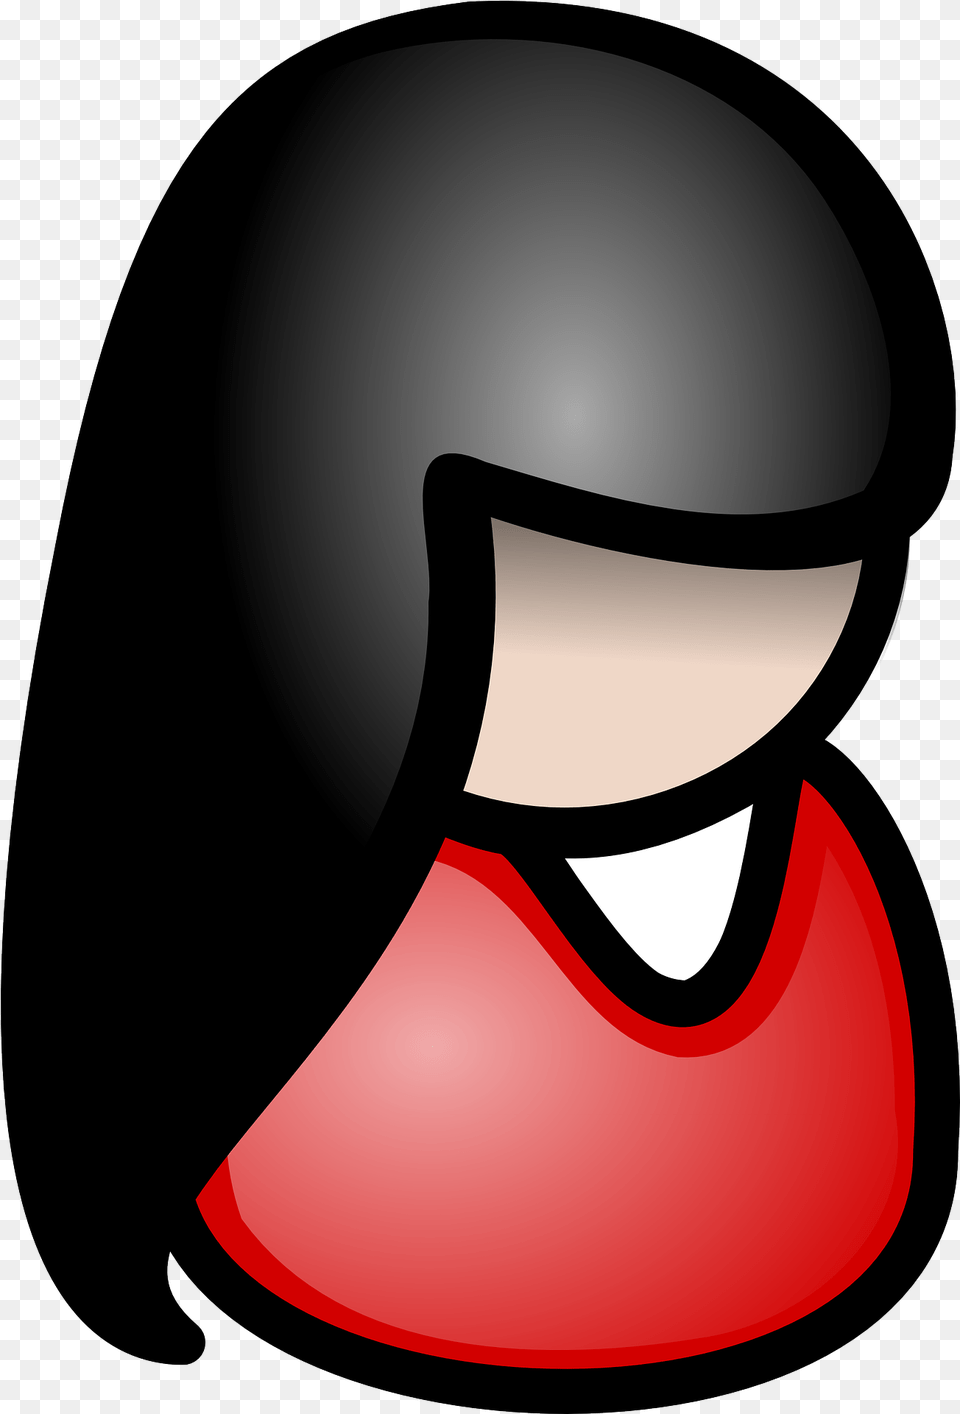 Female Symbol With Black Hair And Red Dress Vector Graphics, Crash Helmet, Helmet Png Image